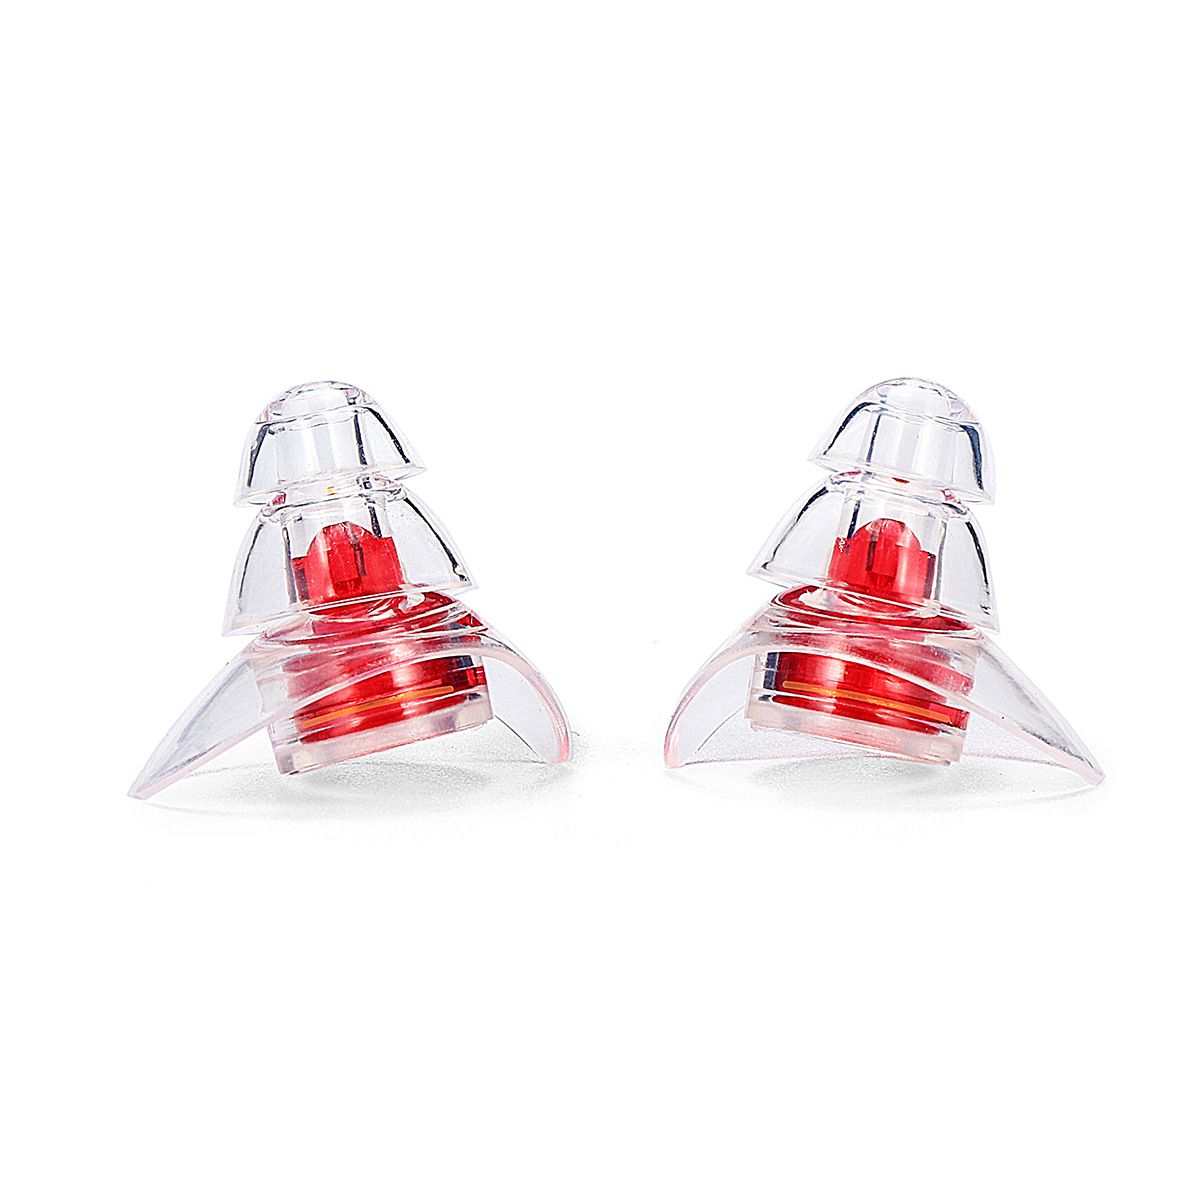 Bright red filter earplugs